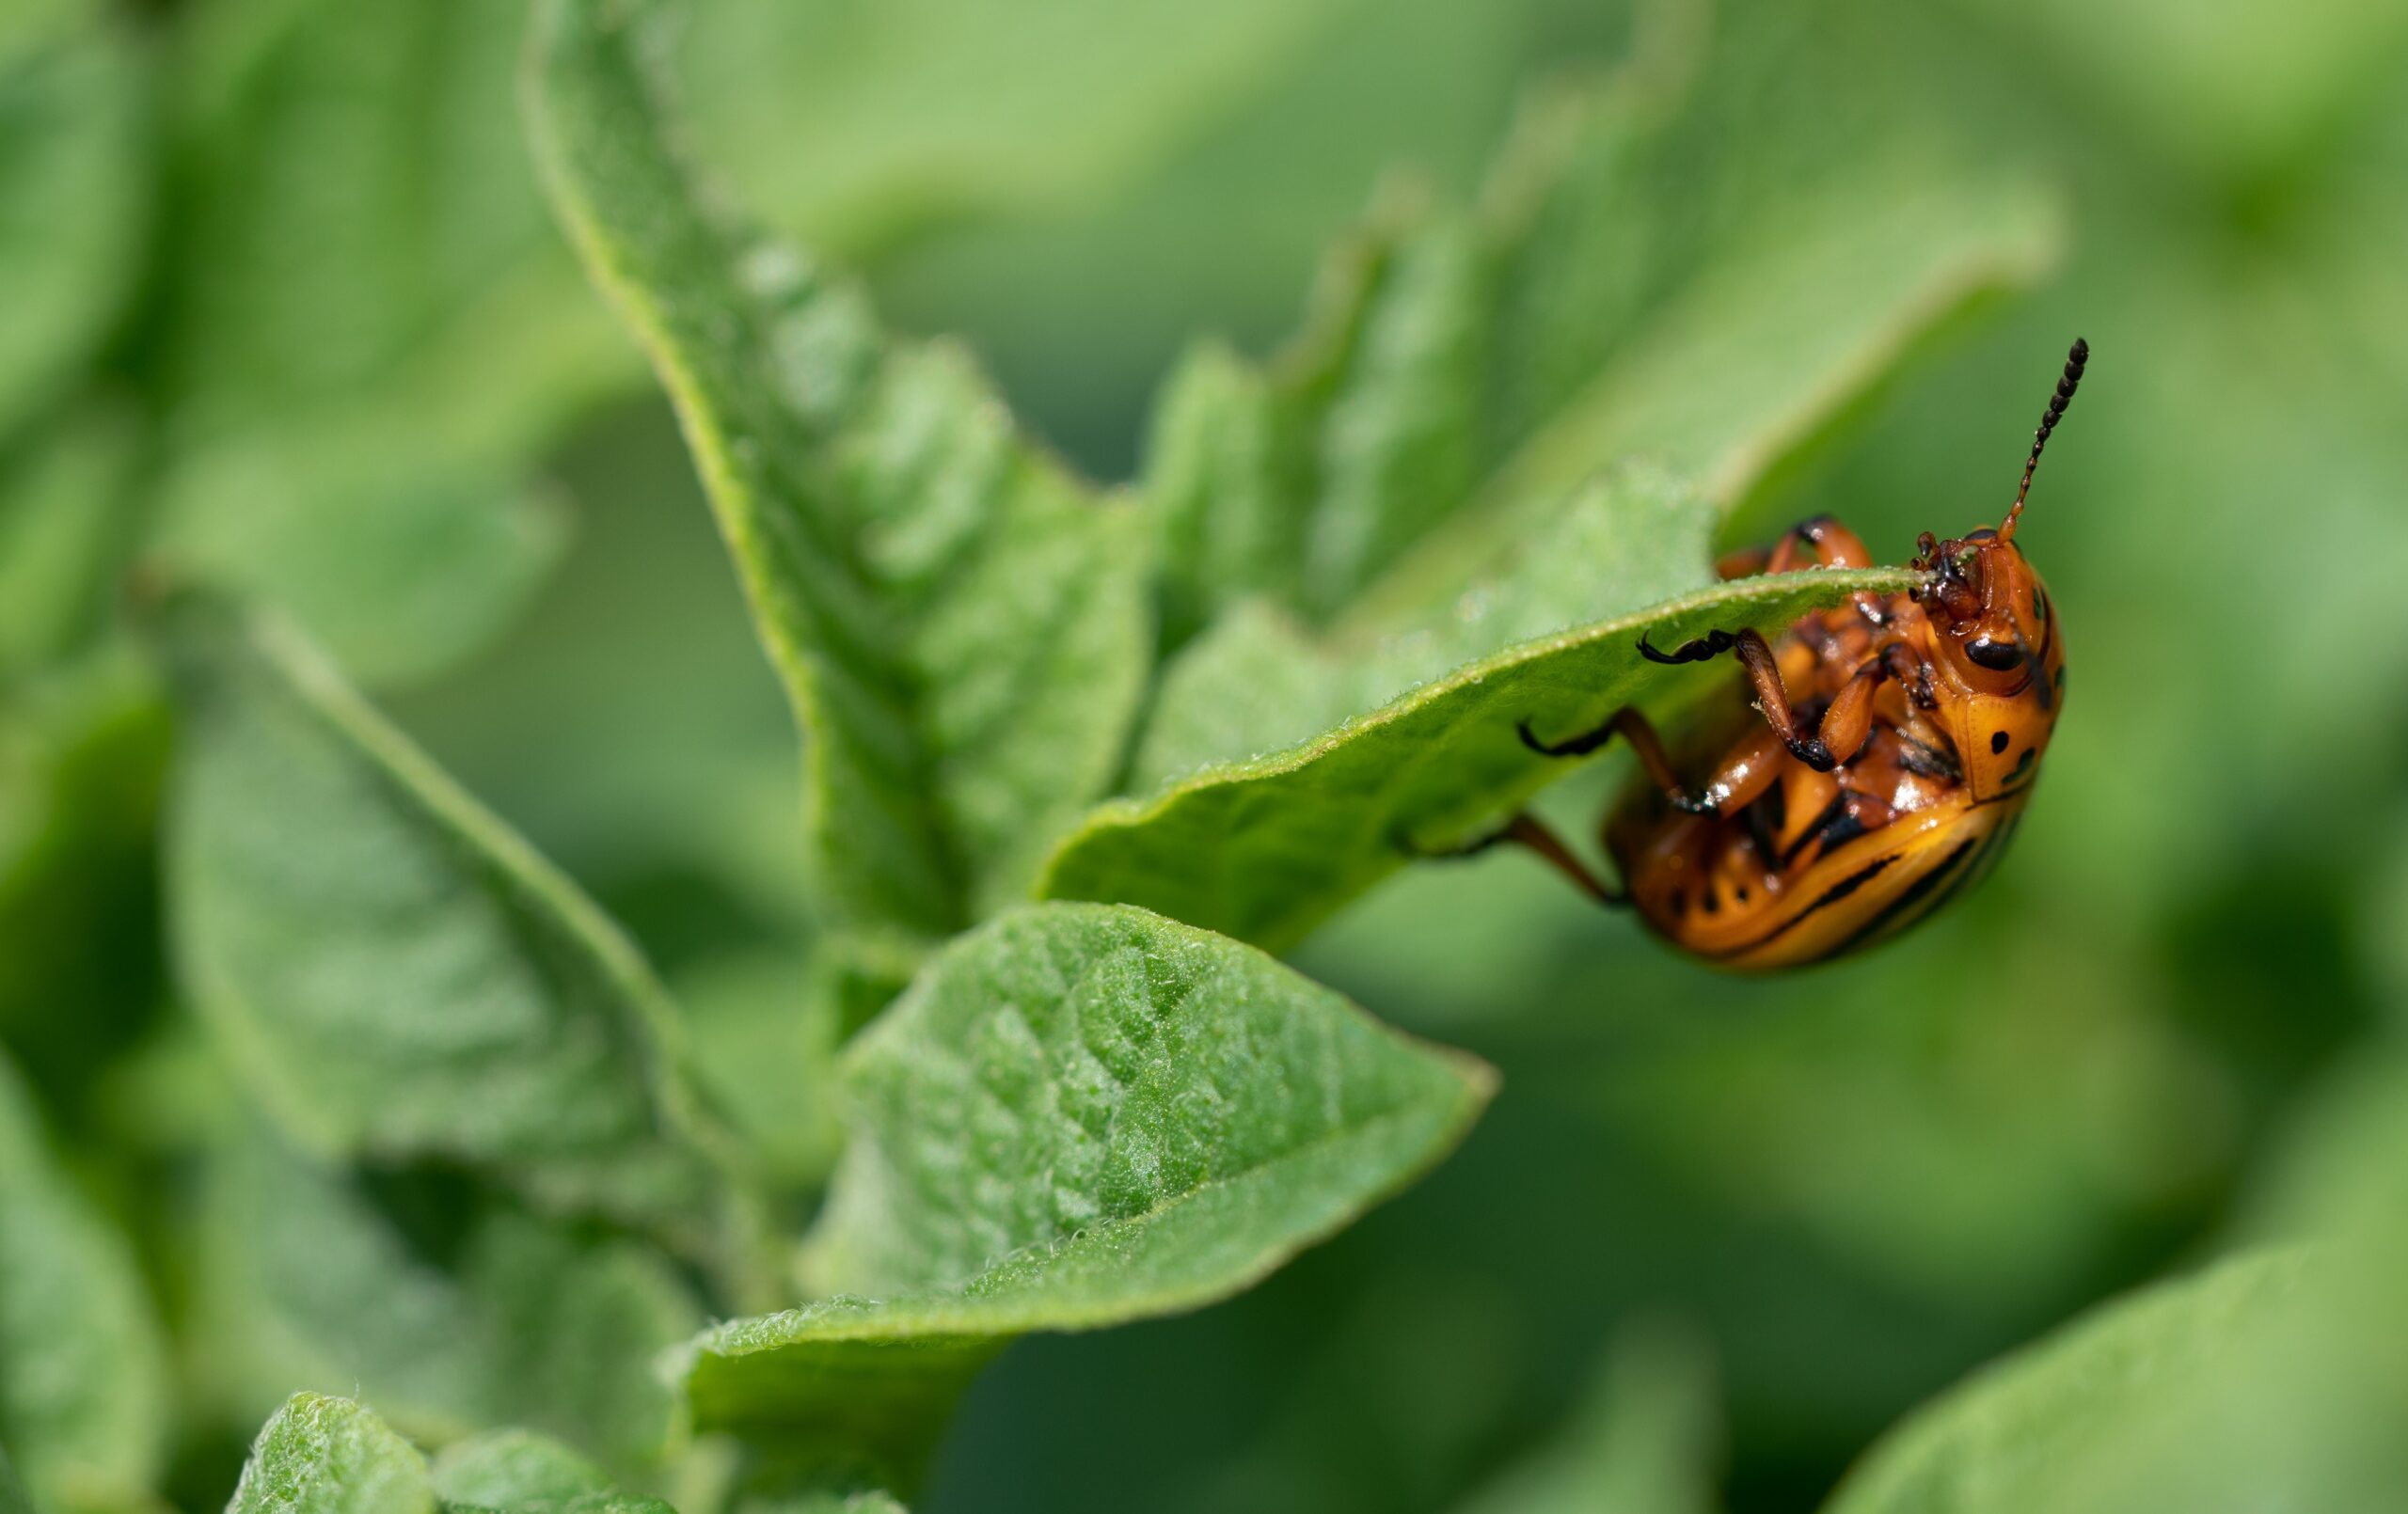 Close-up of a Colorado potato beetle on a potato leaf